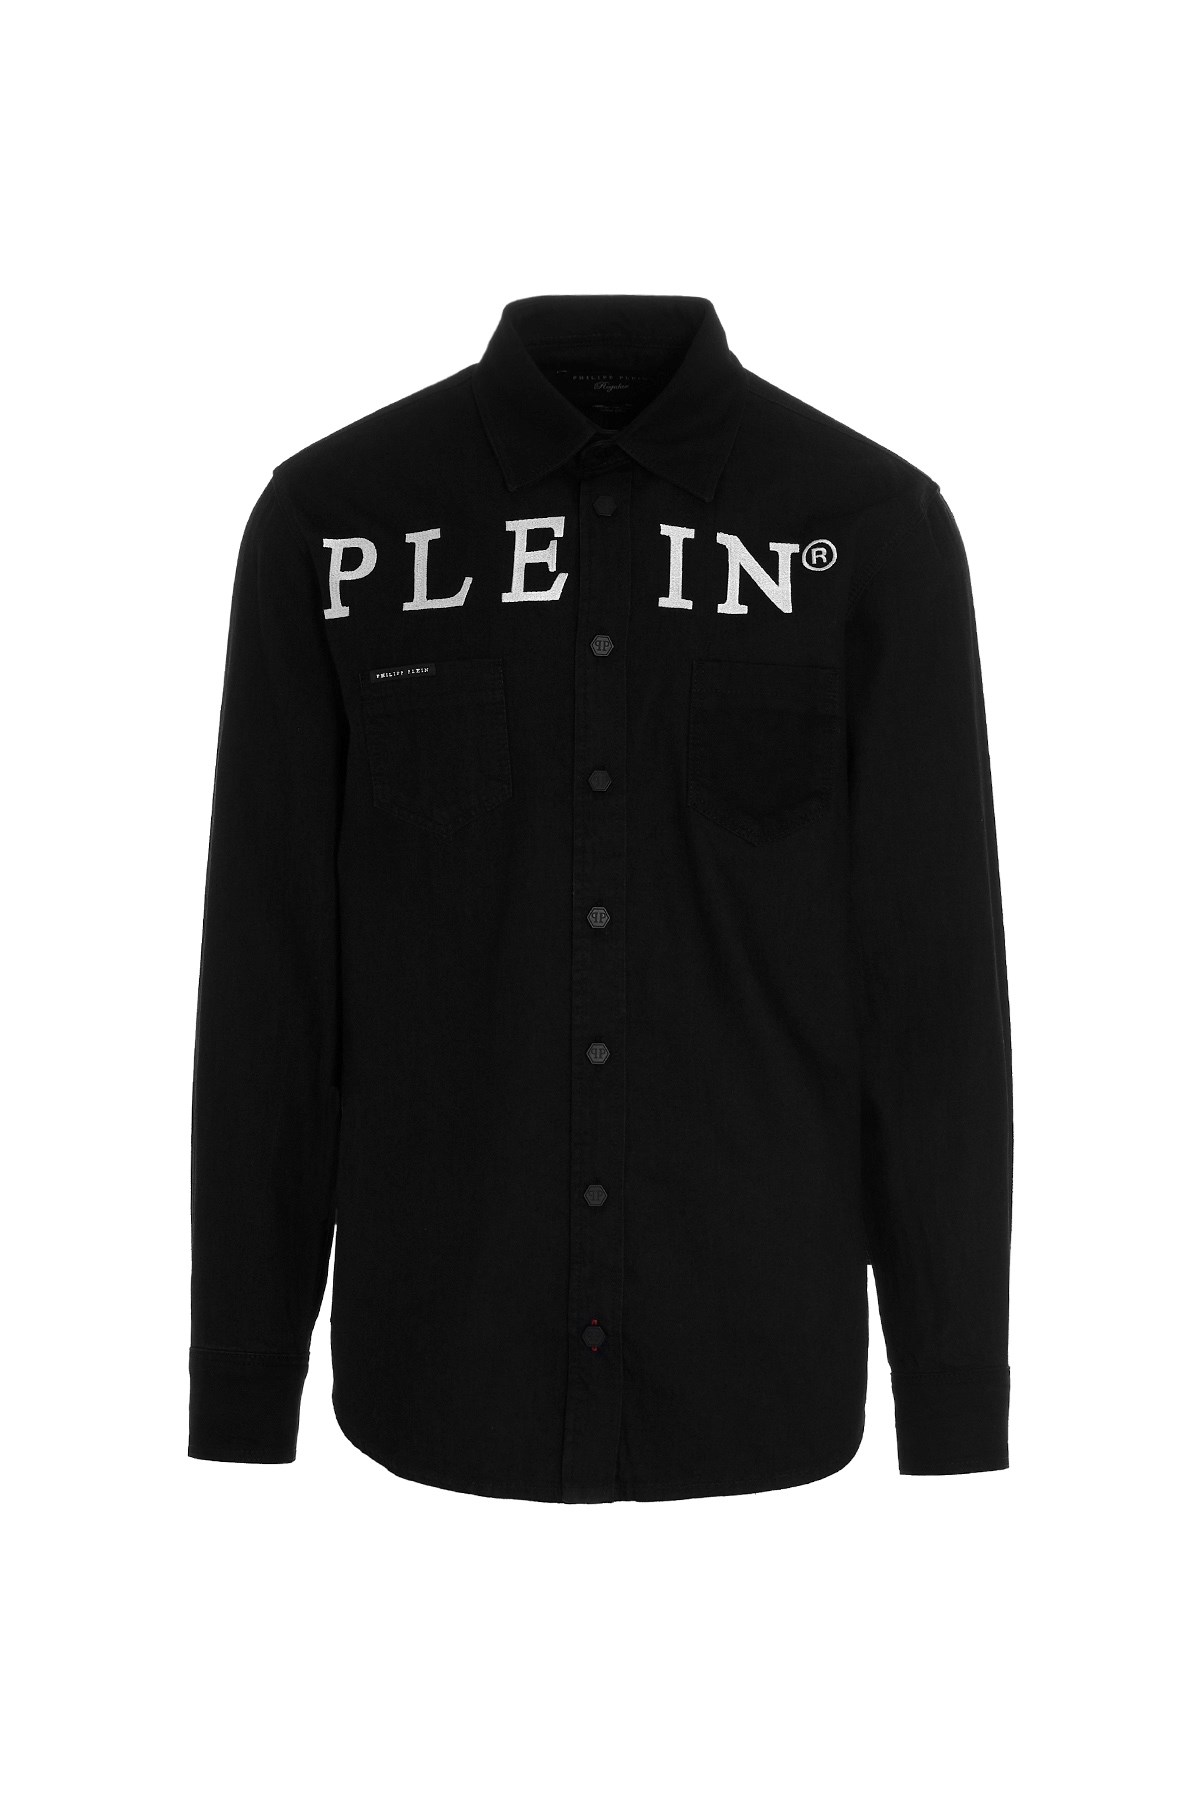 PHILIPP PLEIN 'Iconic Plein’ Shirt